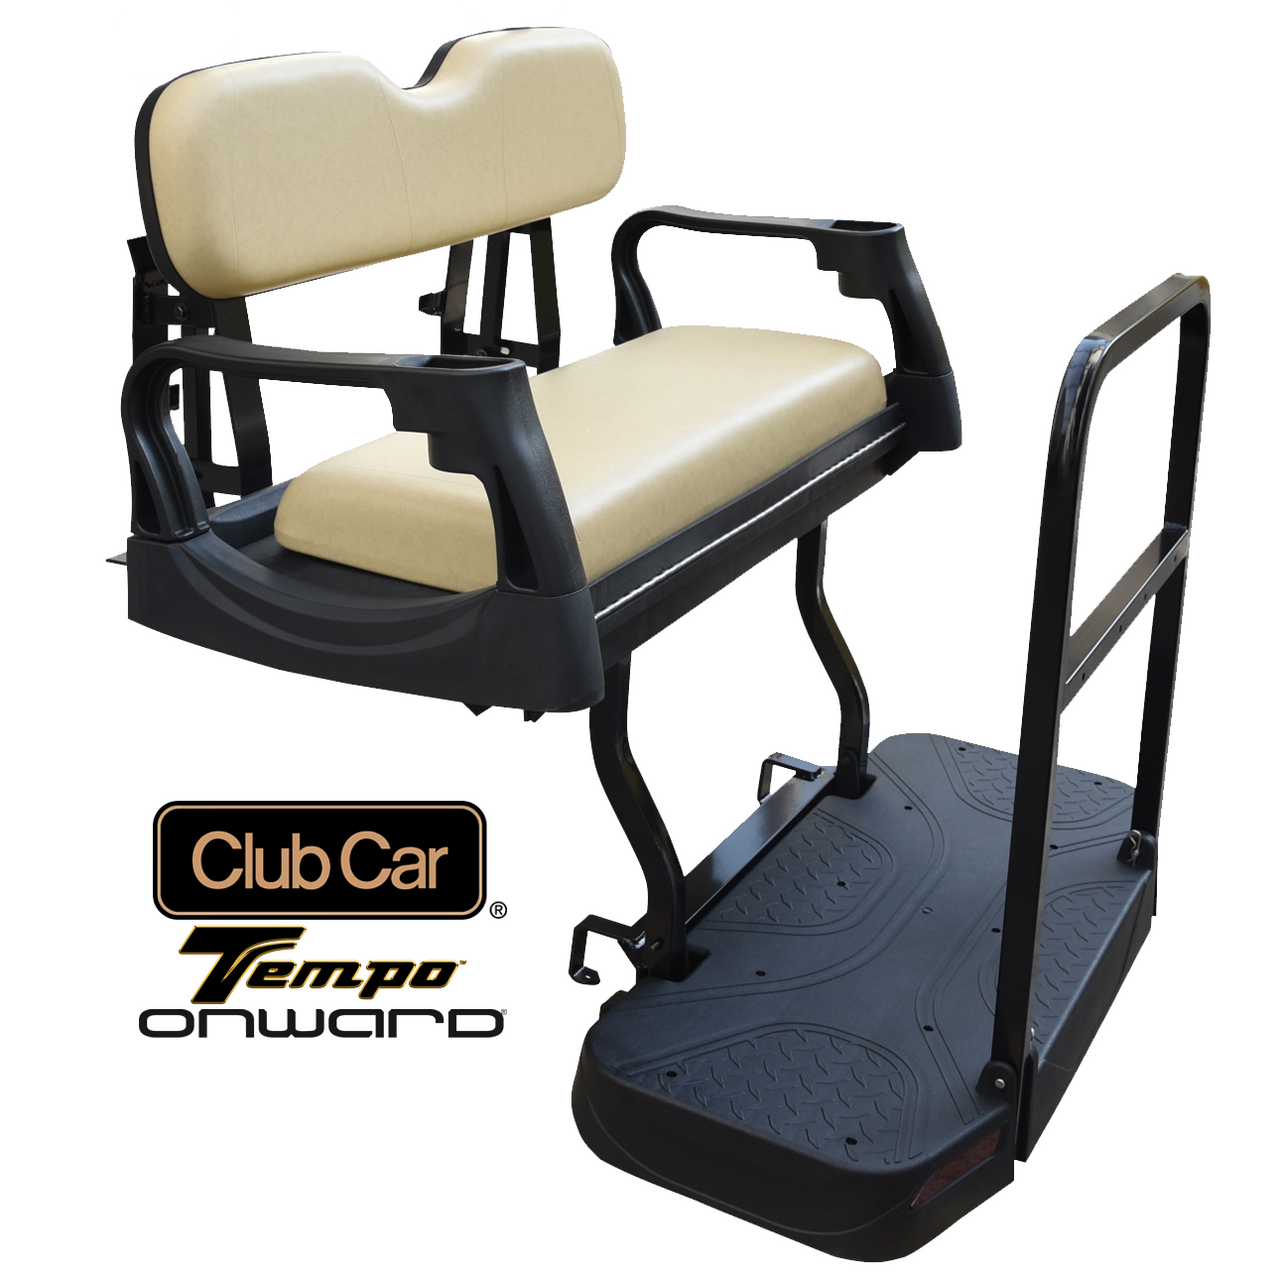 TREX HARMONY Club Car Tempo / Onward Rear Seat Kit BUFF Cushion